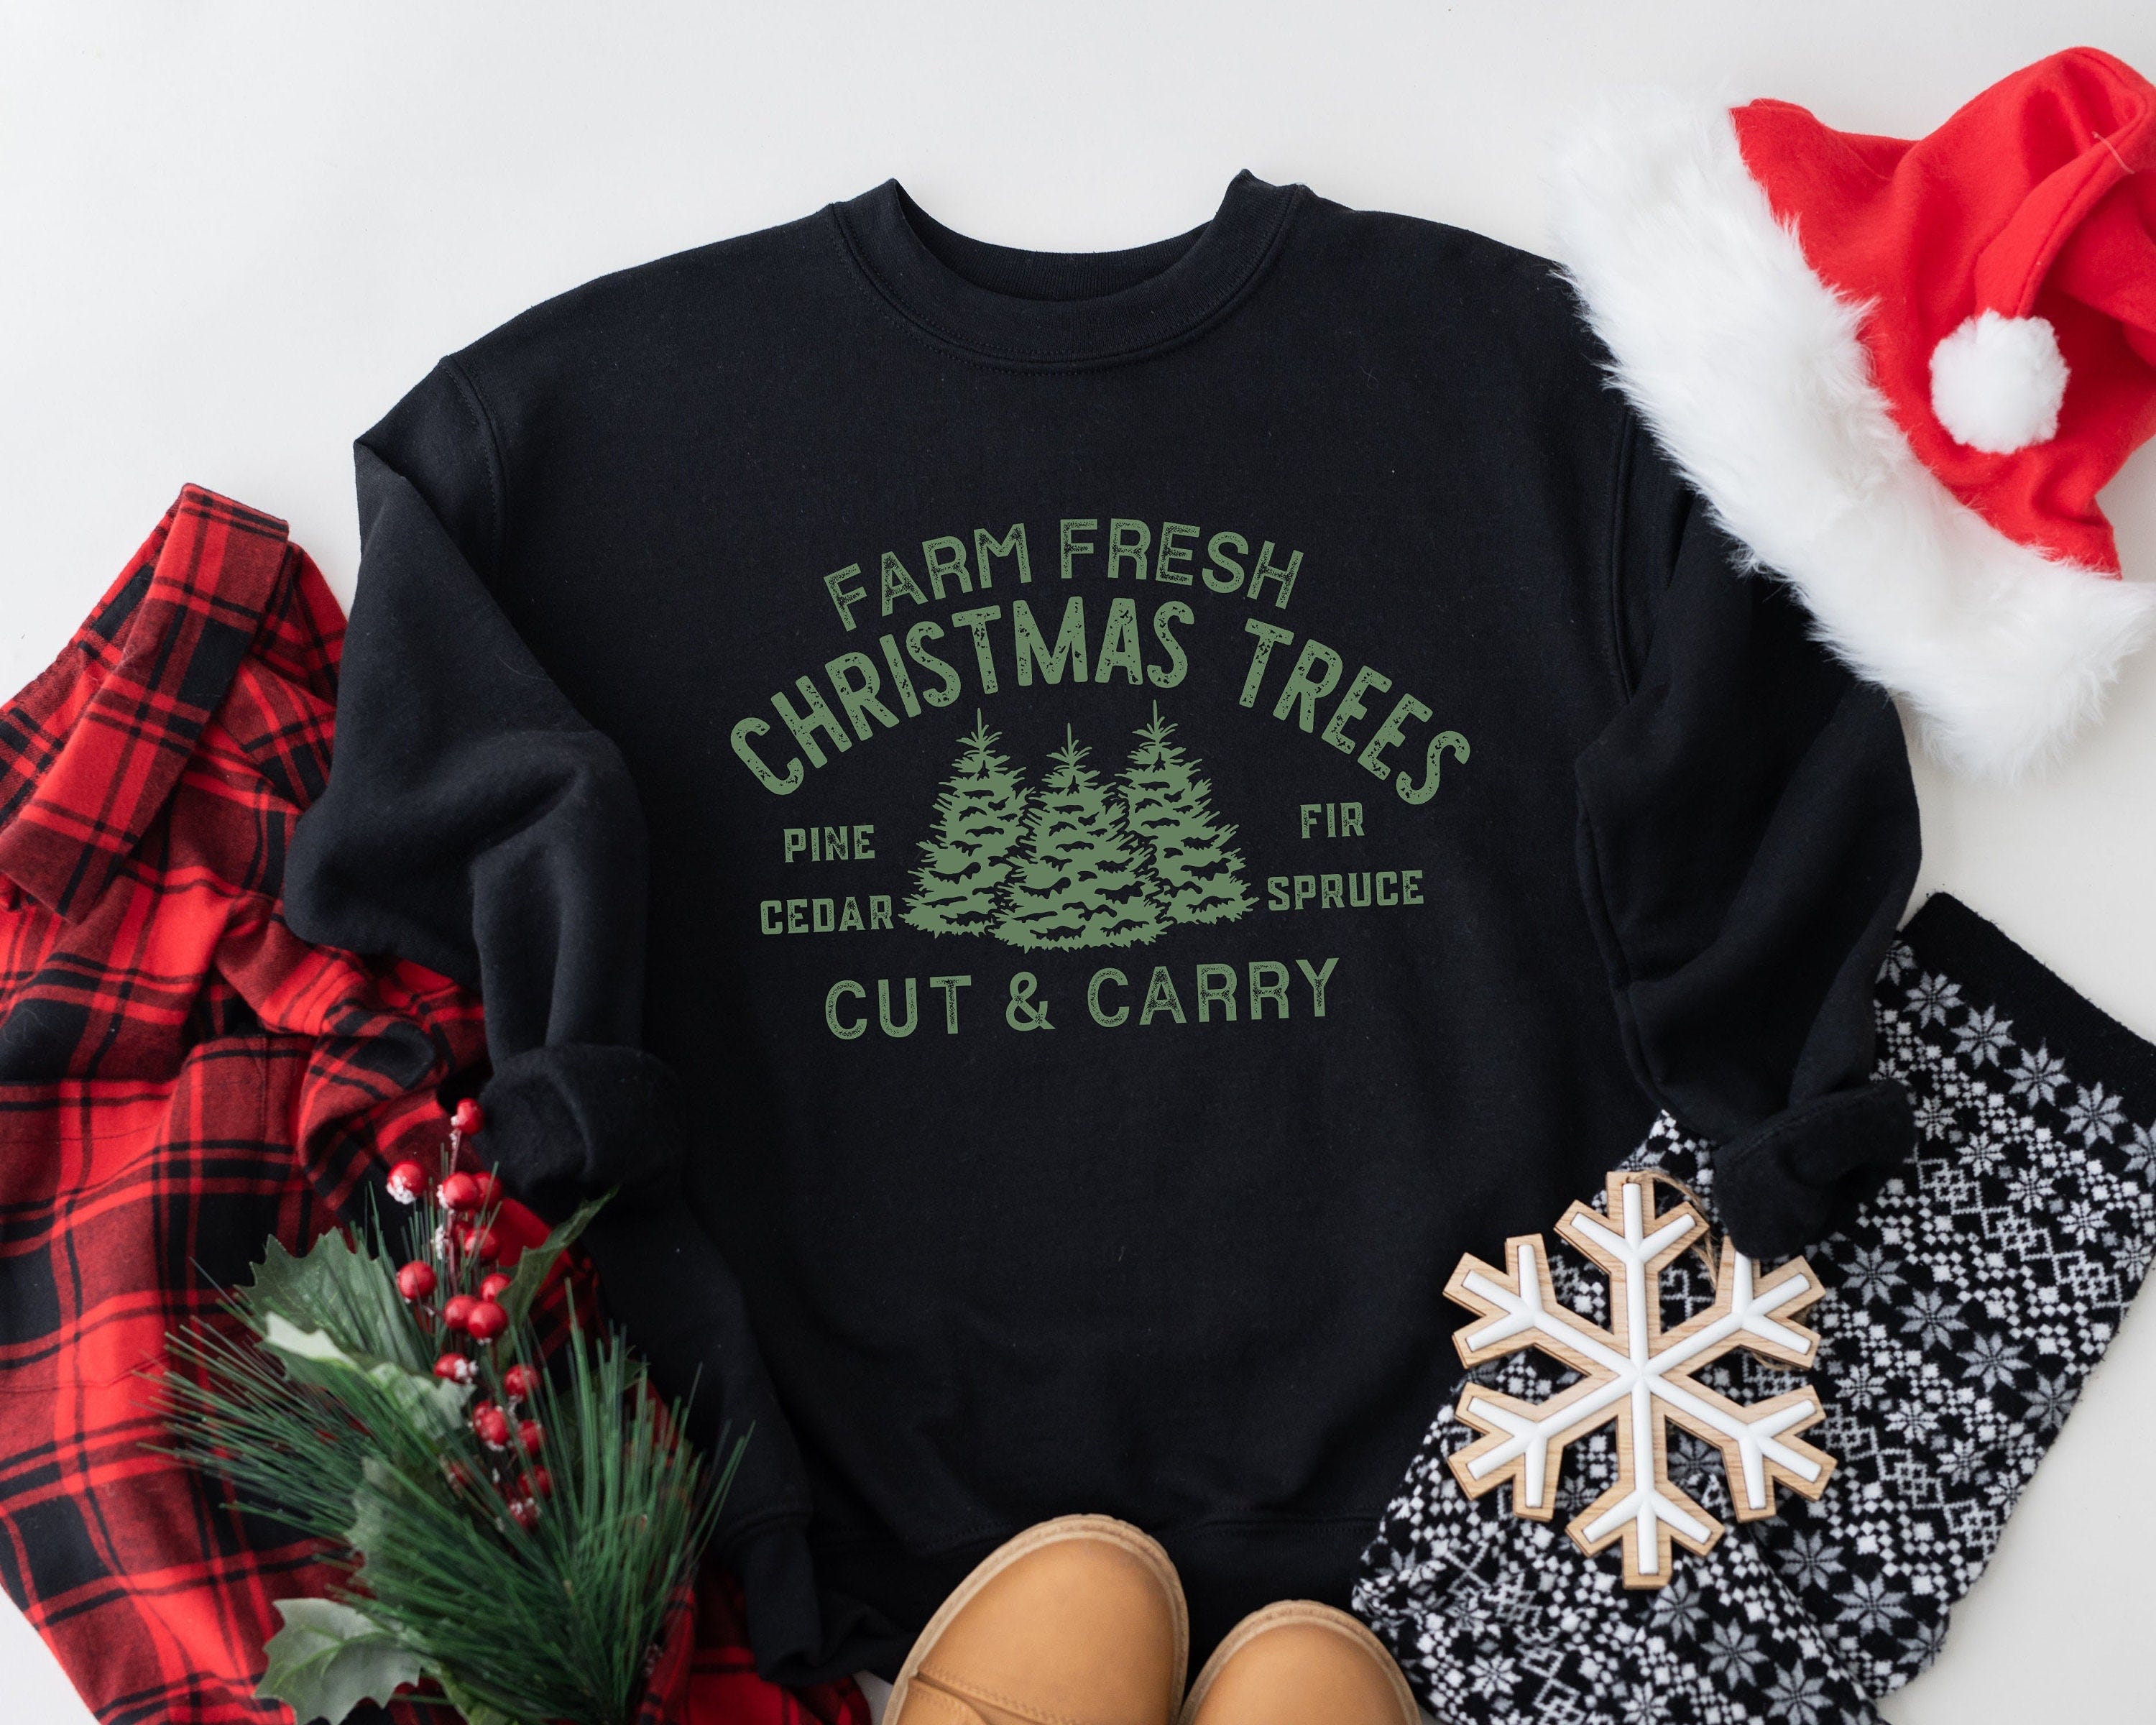 Farm Fresh Christmas Trees Shirt, Pine Spruce Fir, Christmas Gift Ideas, Holiday Shirt, Christmas Sweatshirt, Unisex Adult Tee, Winter Tee